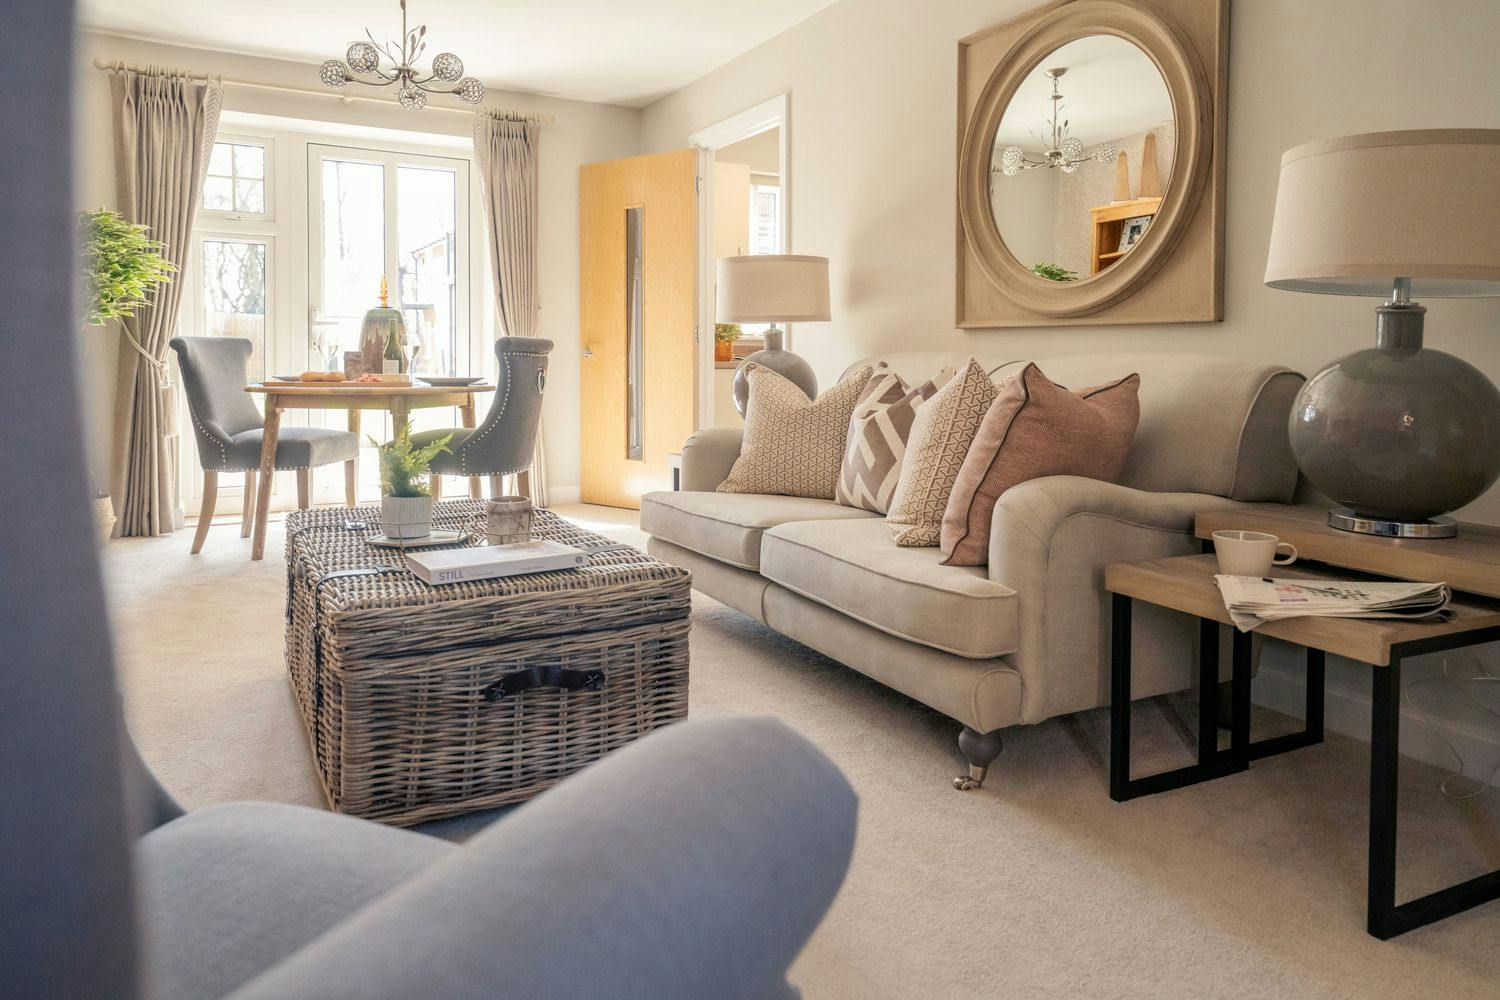 Living Room at Bowles Court Retirement Development in Chippenham, Wiltshire